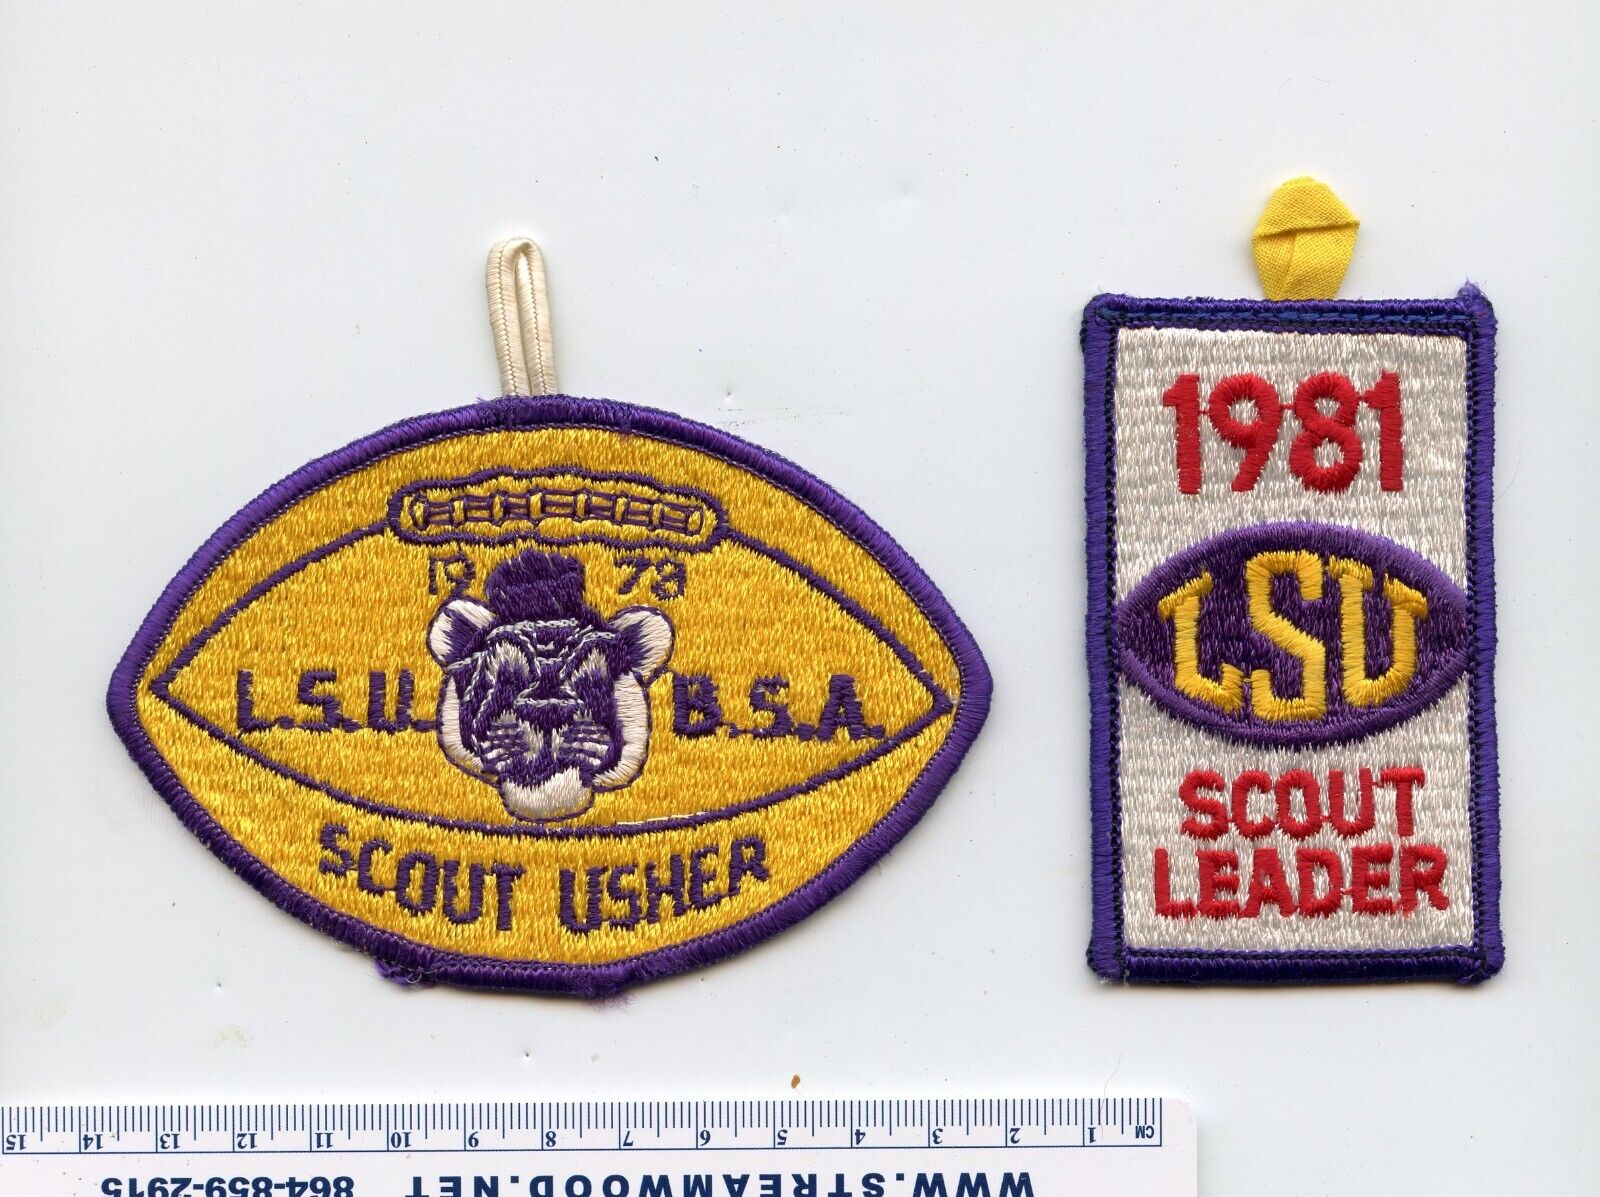 1978 Istrouma area council LSU scout usher & 1981 leader pocket patch BSA 